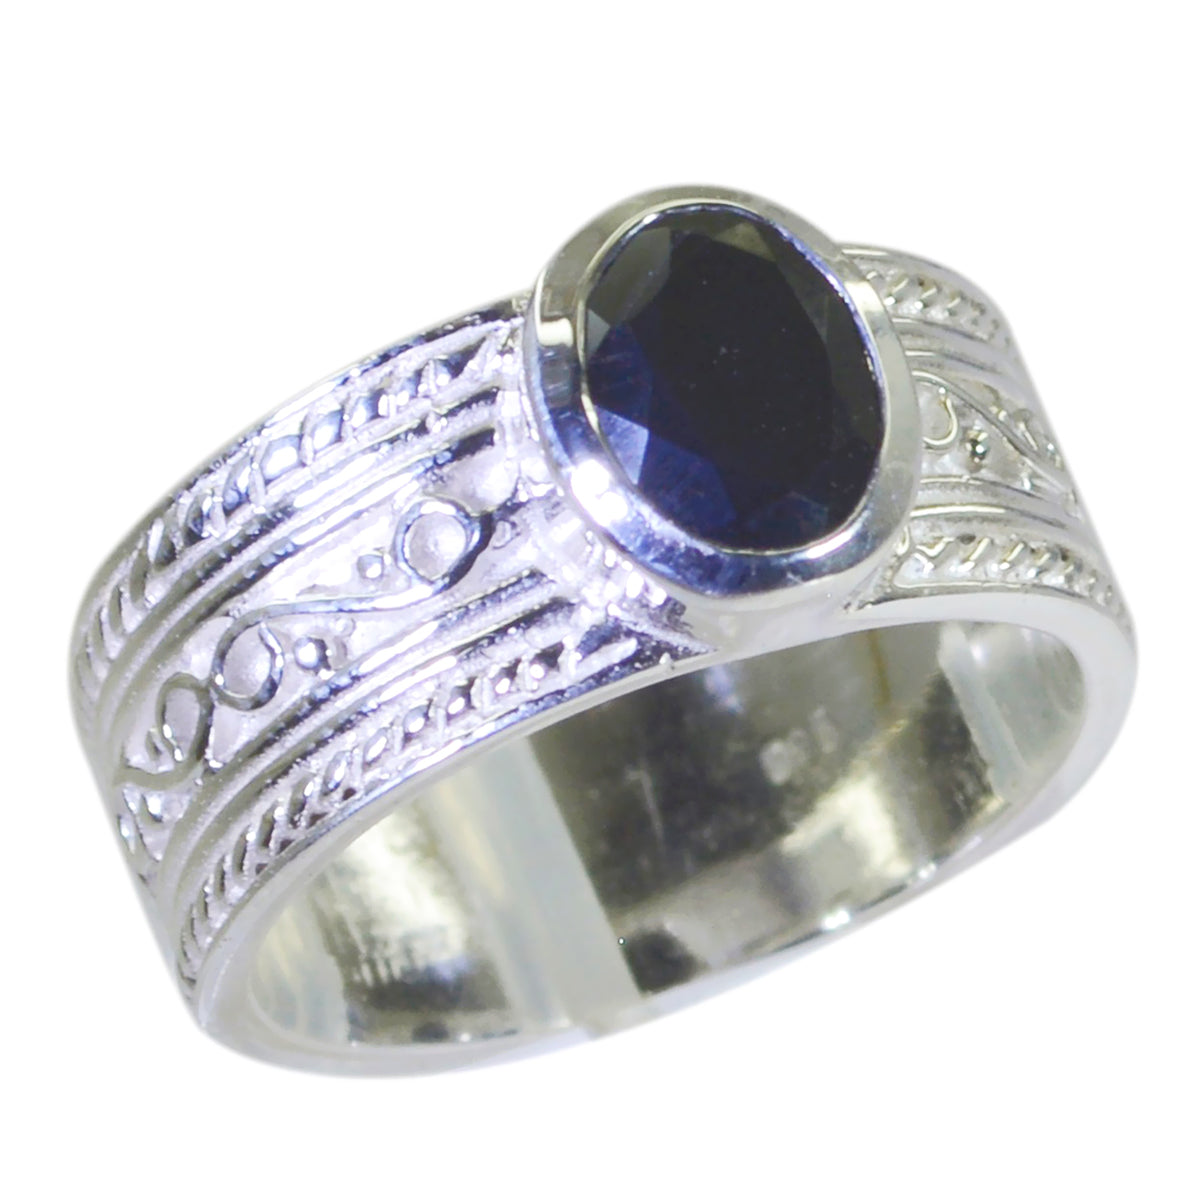 Winning Gemstone Black Onyx 925 Silver Ring Hand Stamped Jewelry